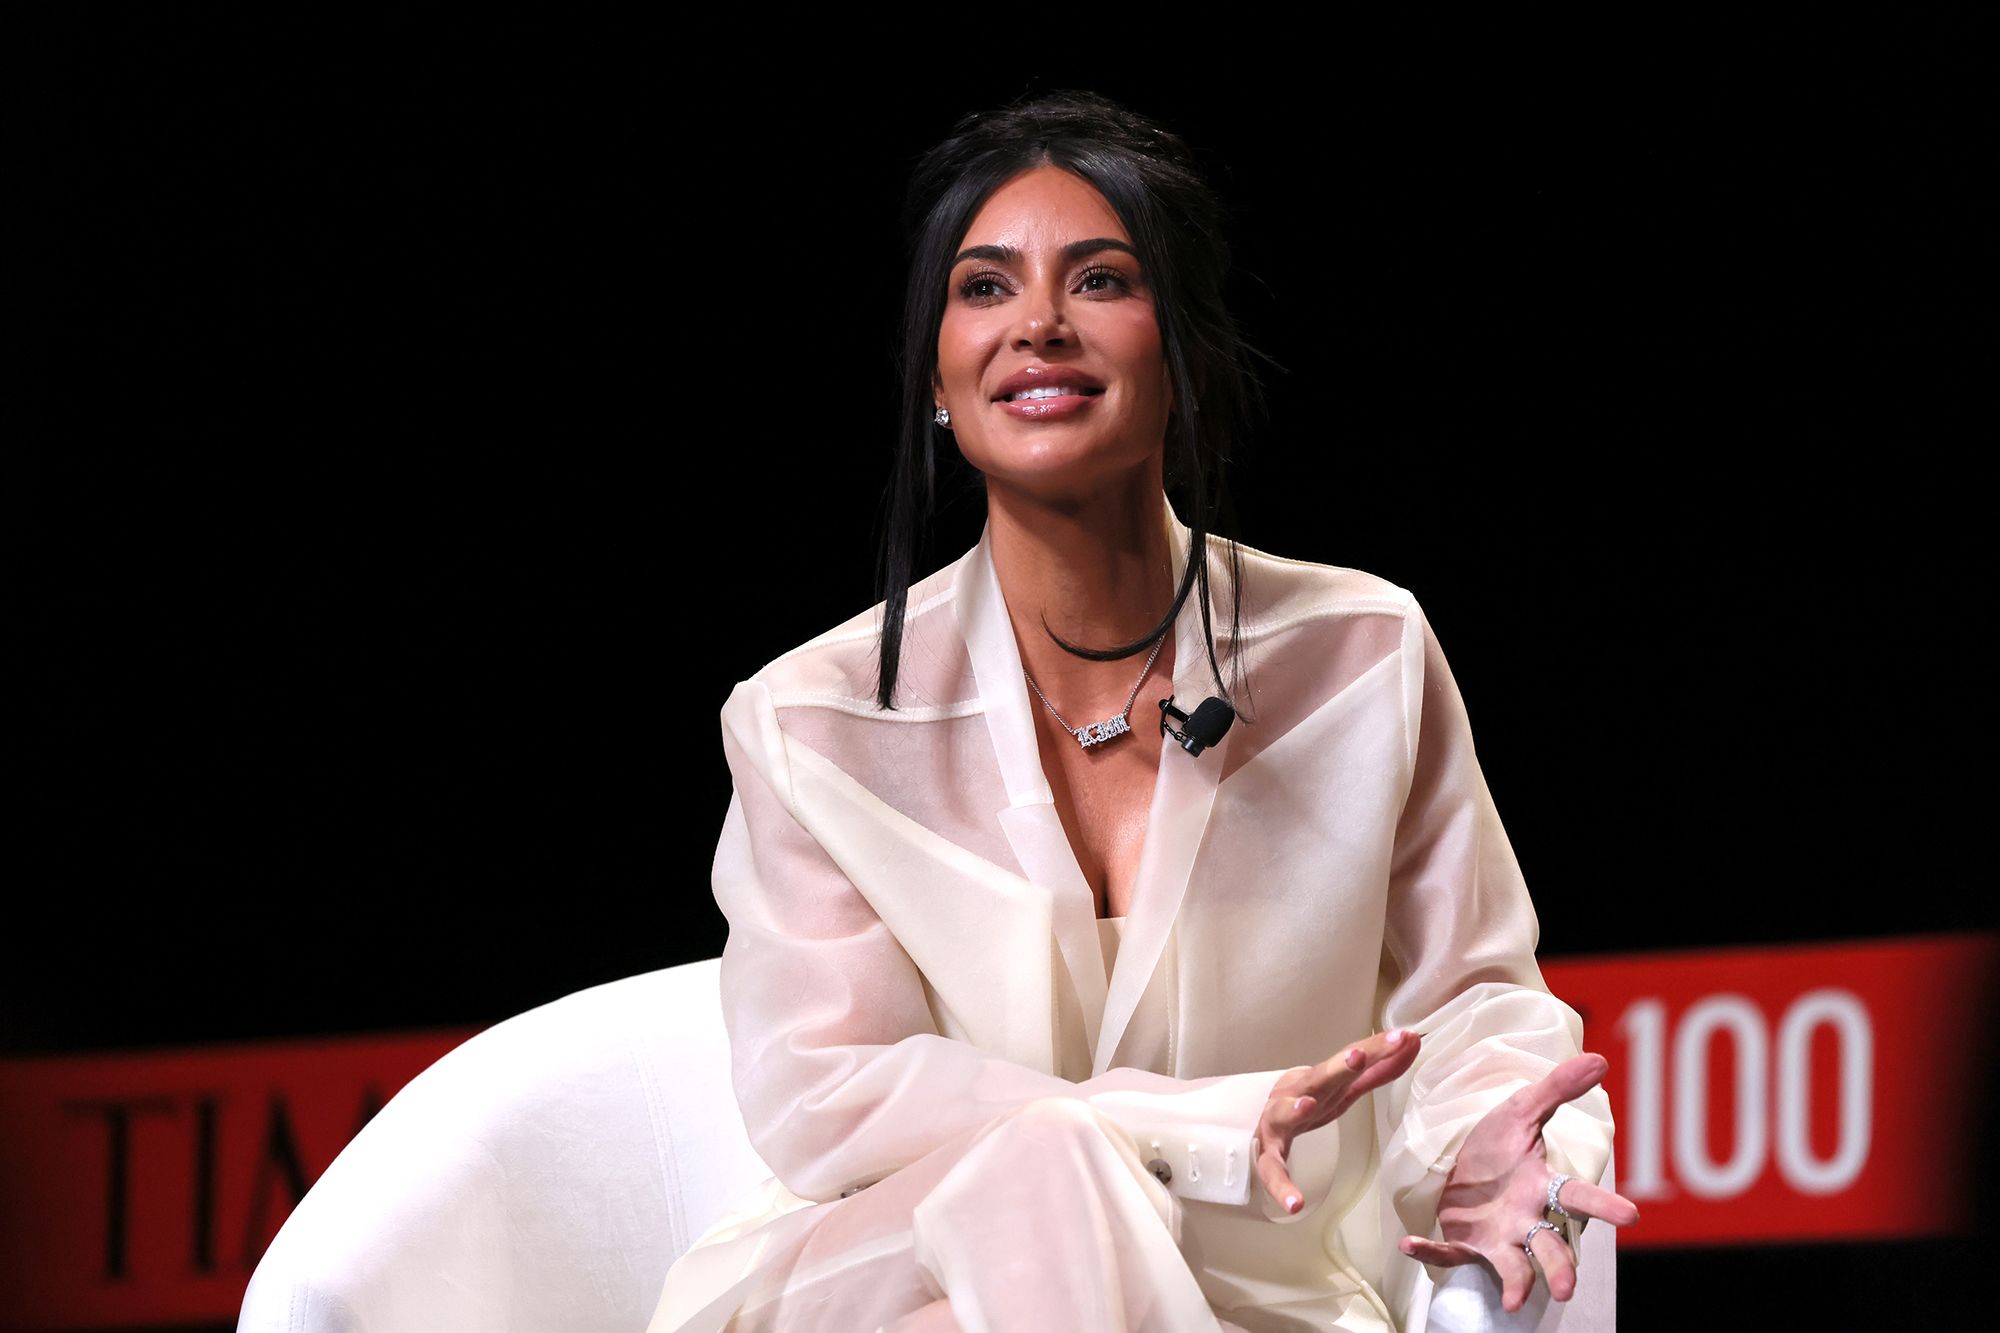 Hear what makes Kim Kardashian's businesses 'magic